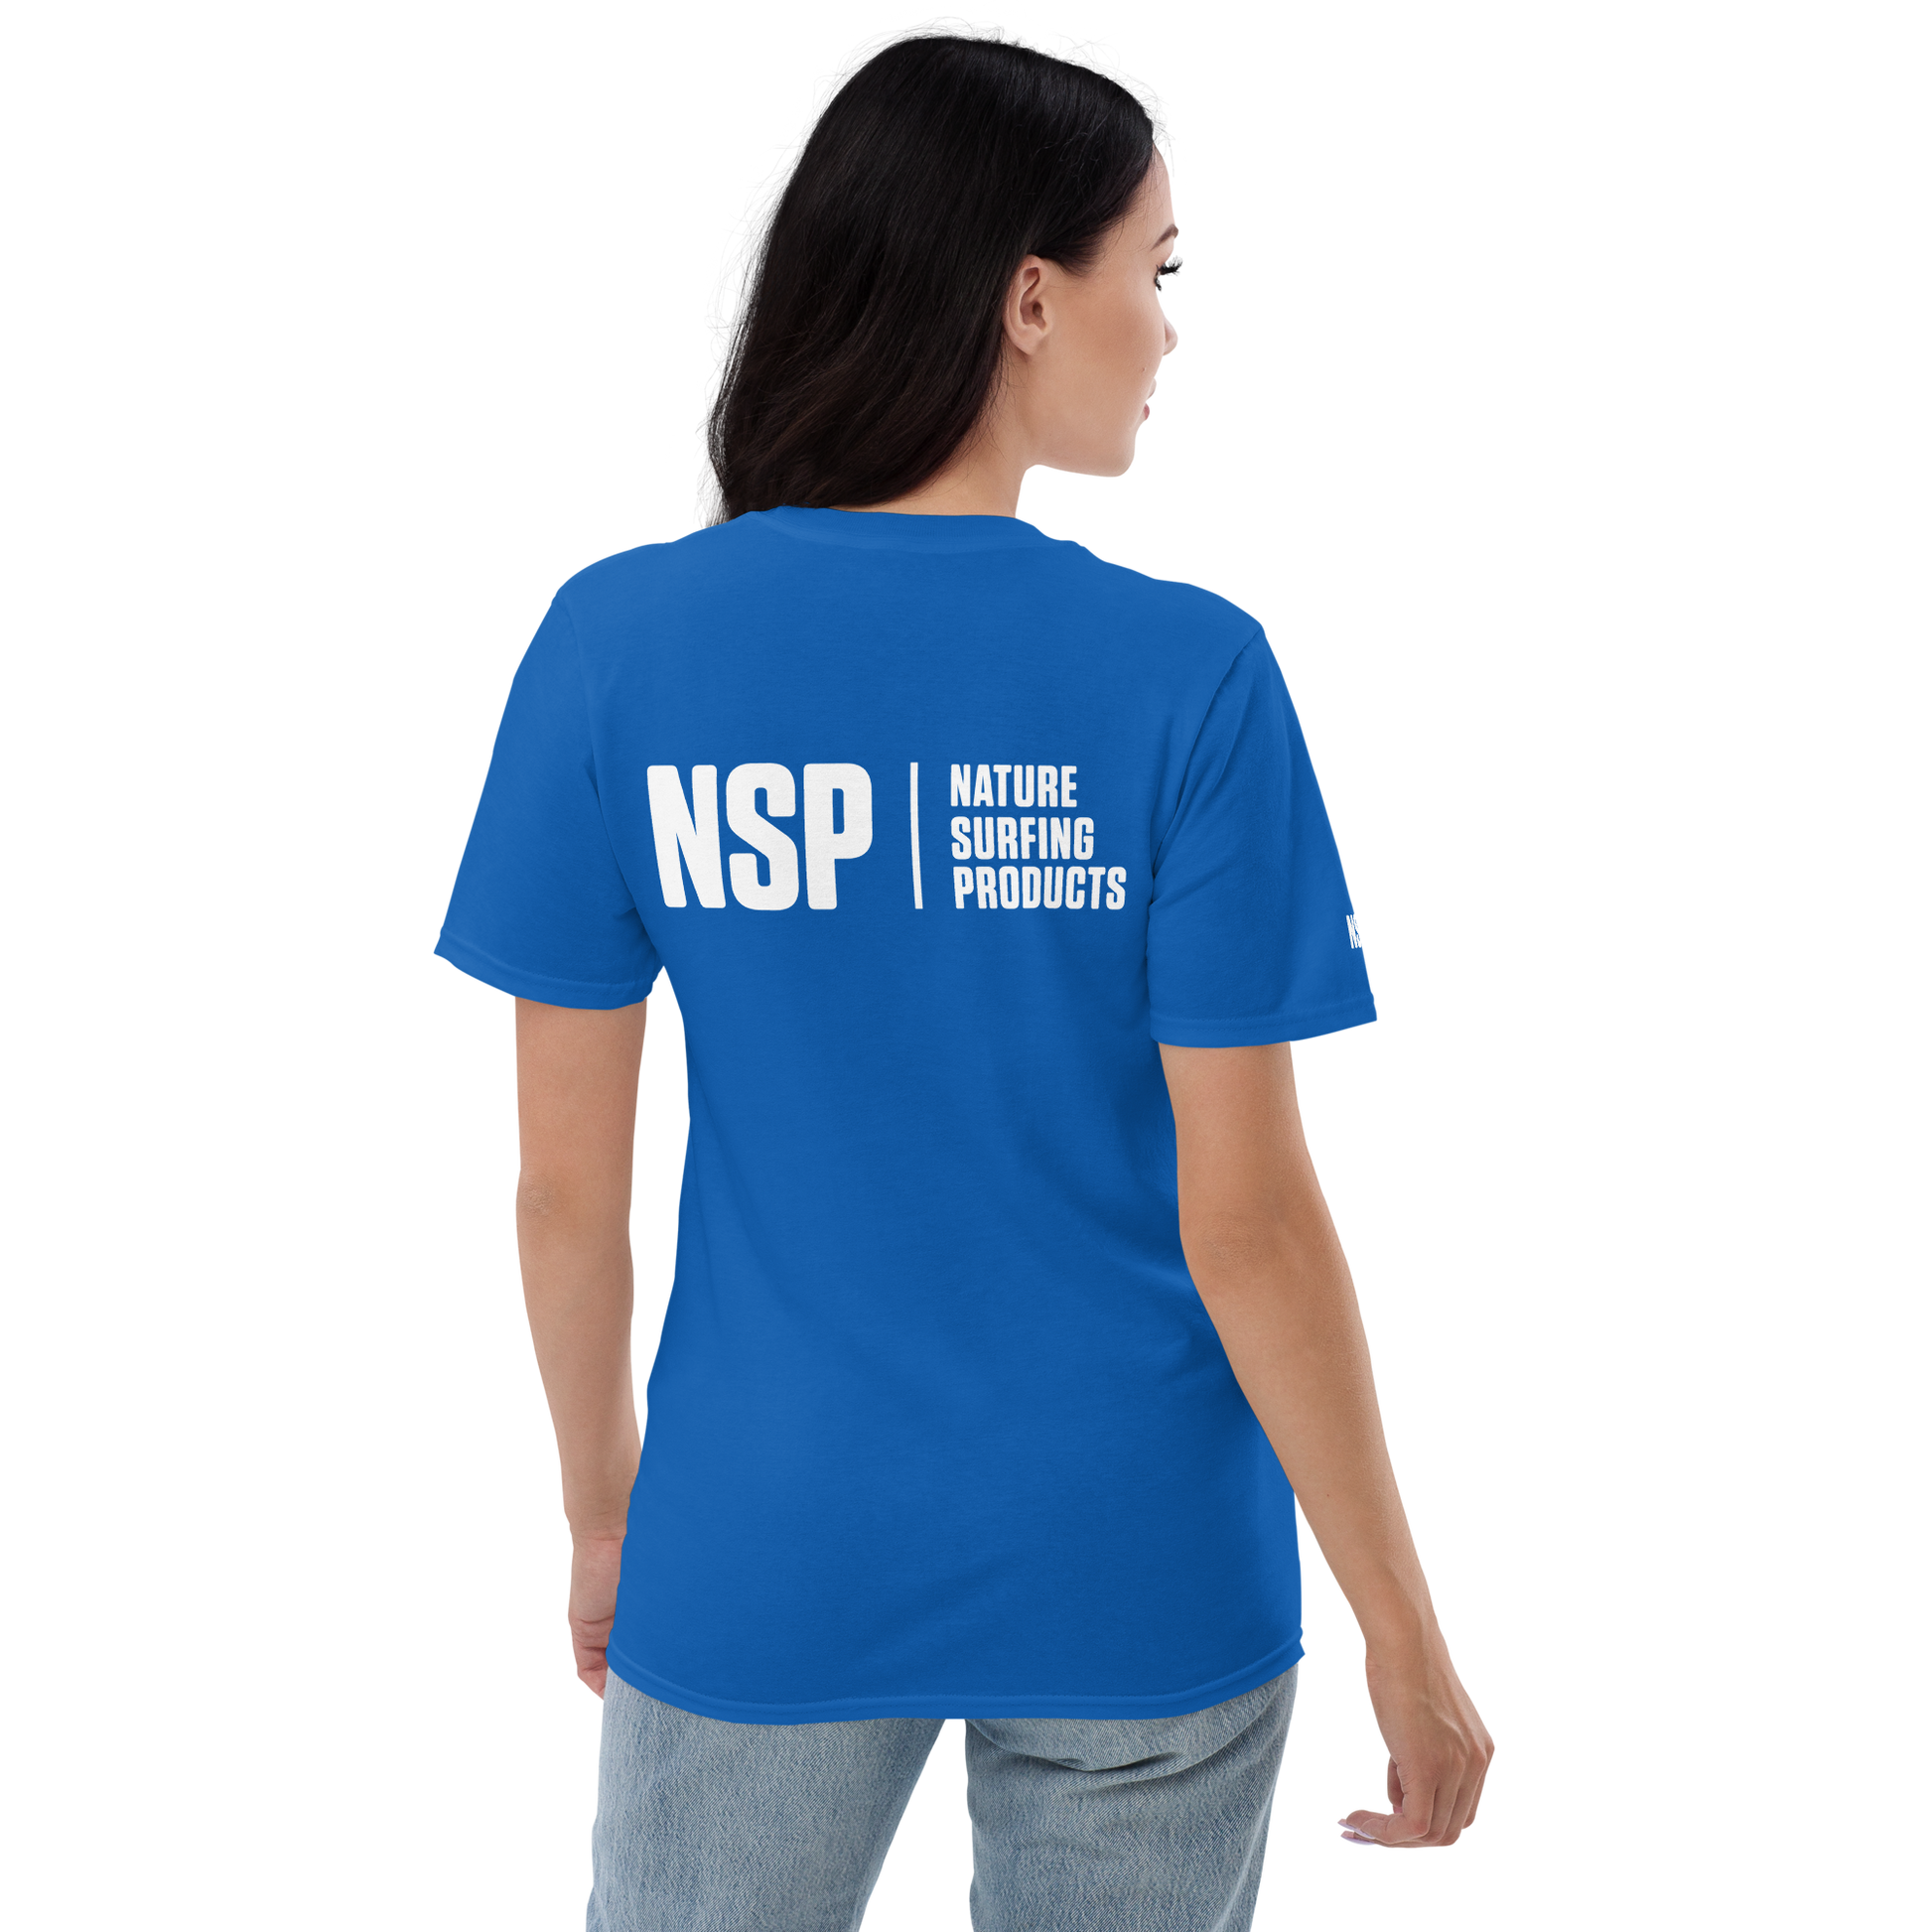 Women's Dark Short-Sleeve T-Shirt  NSP USA  